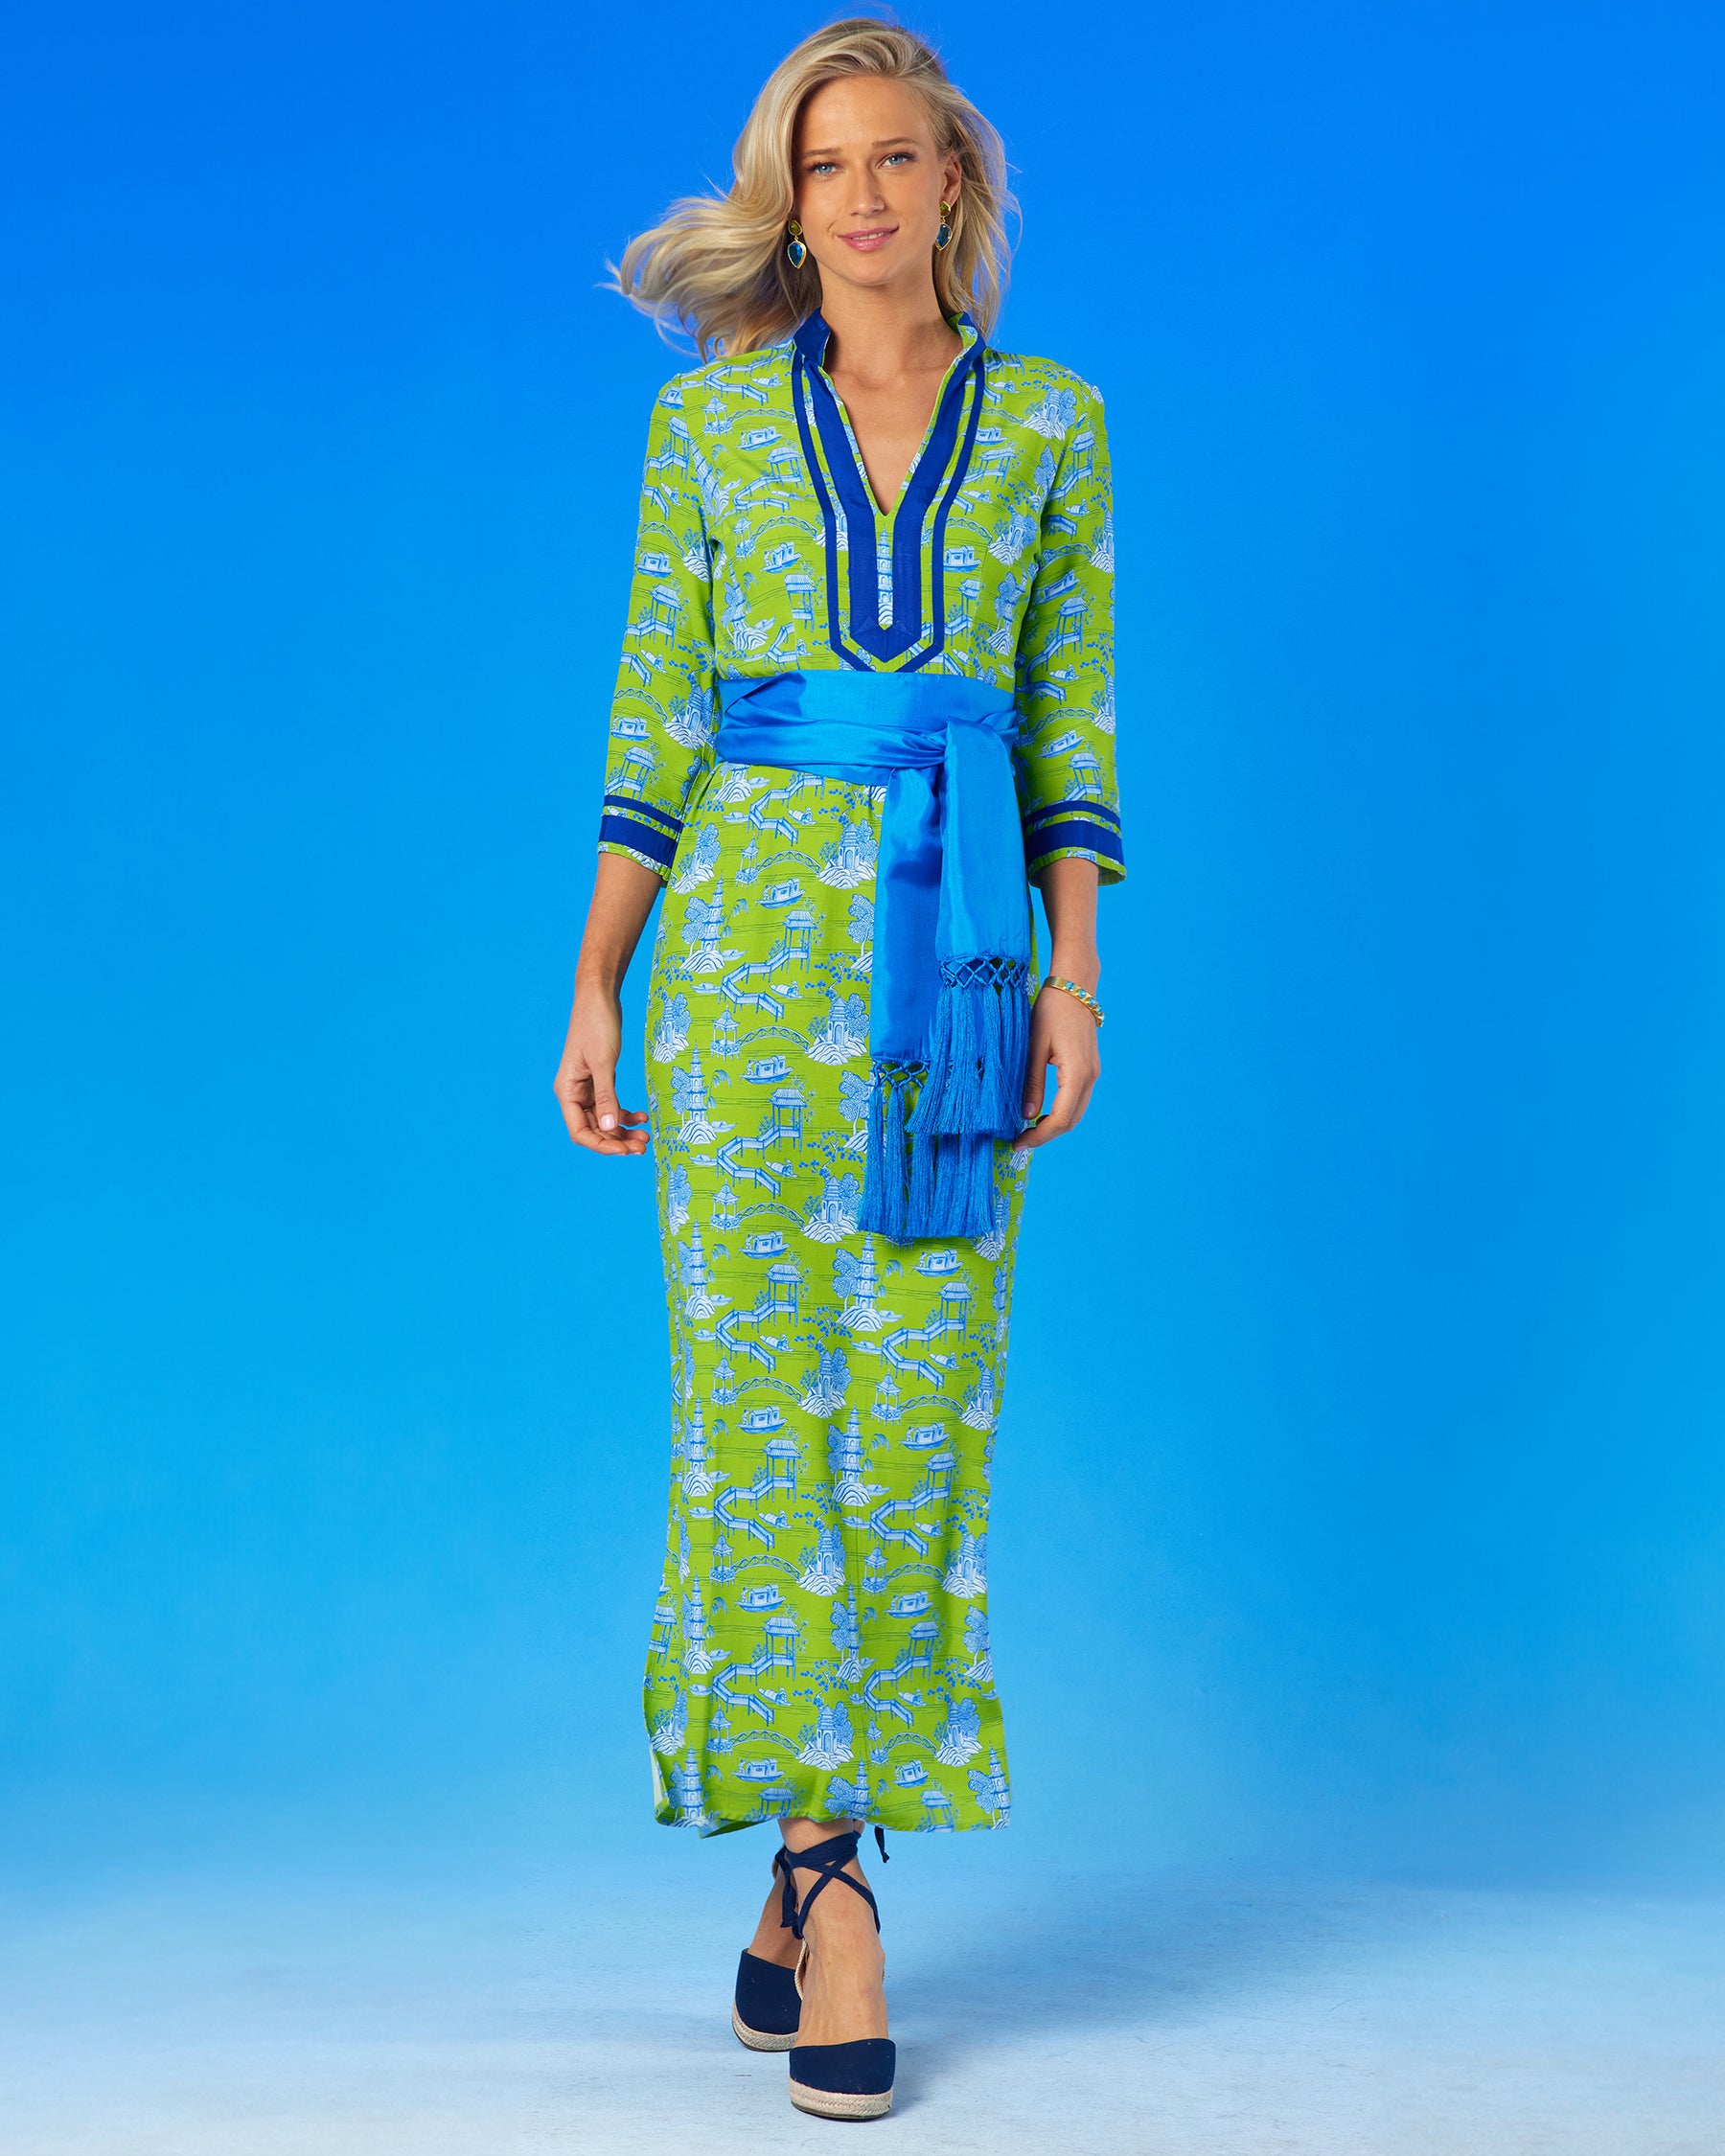 Cosima Sash Belt in Regency Blue worn with the Capri Long Tunic Dress in Pagoda Toile